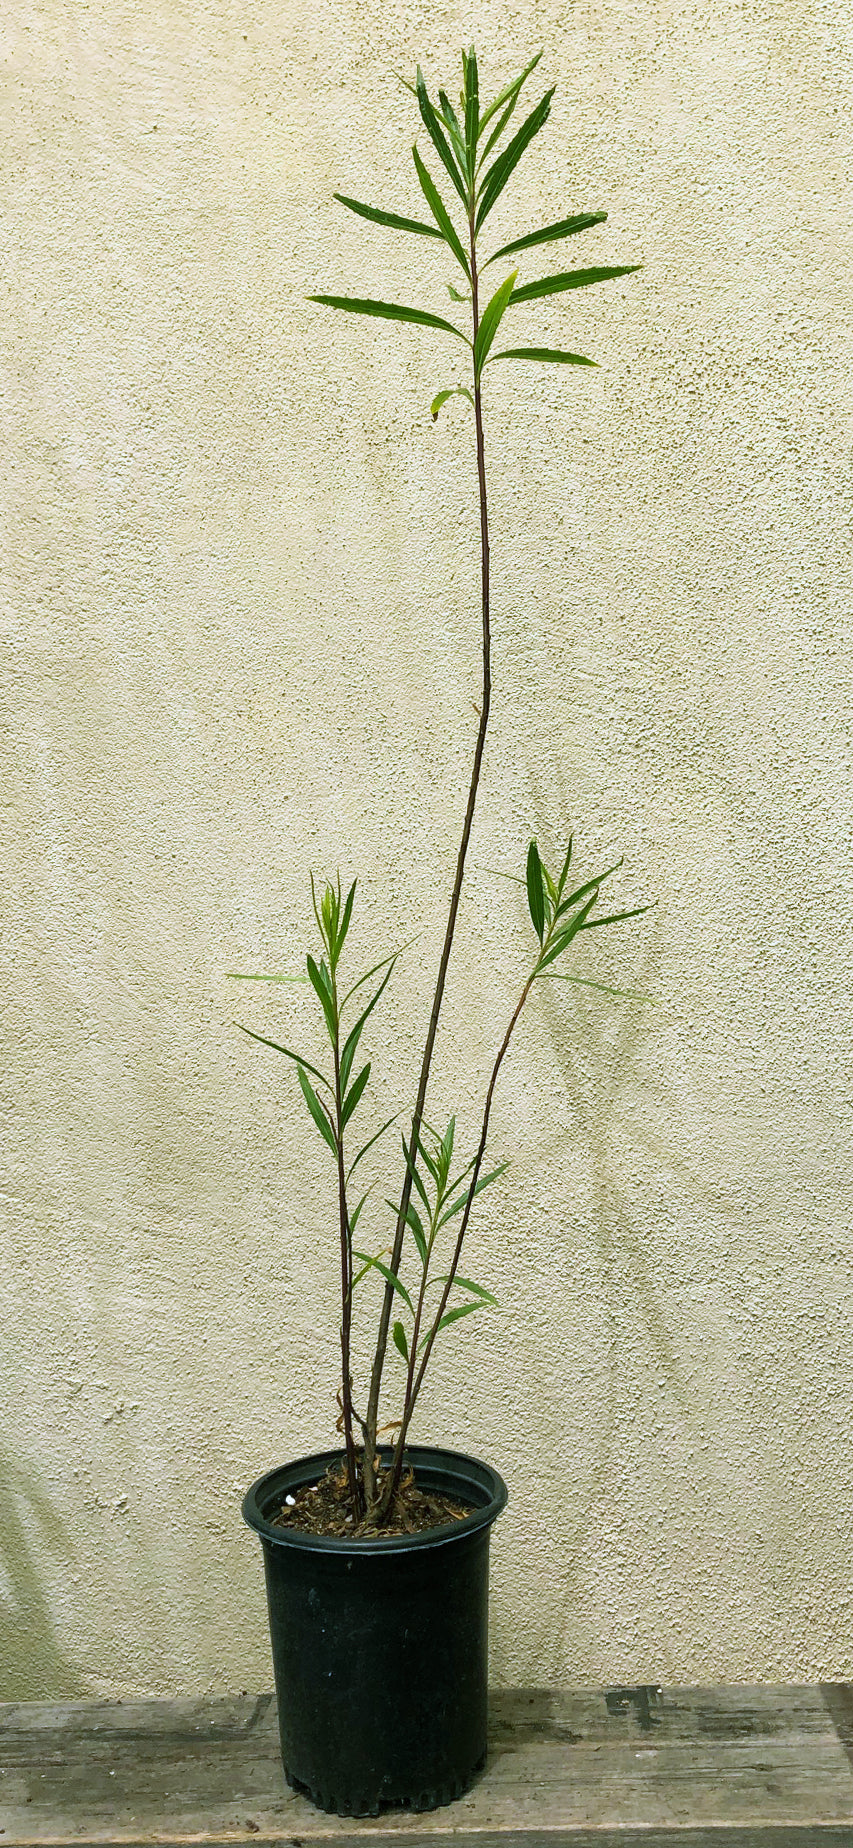 Baccharis salicifolia (Mulefat)